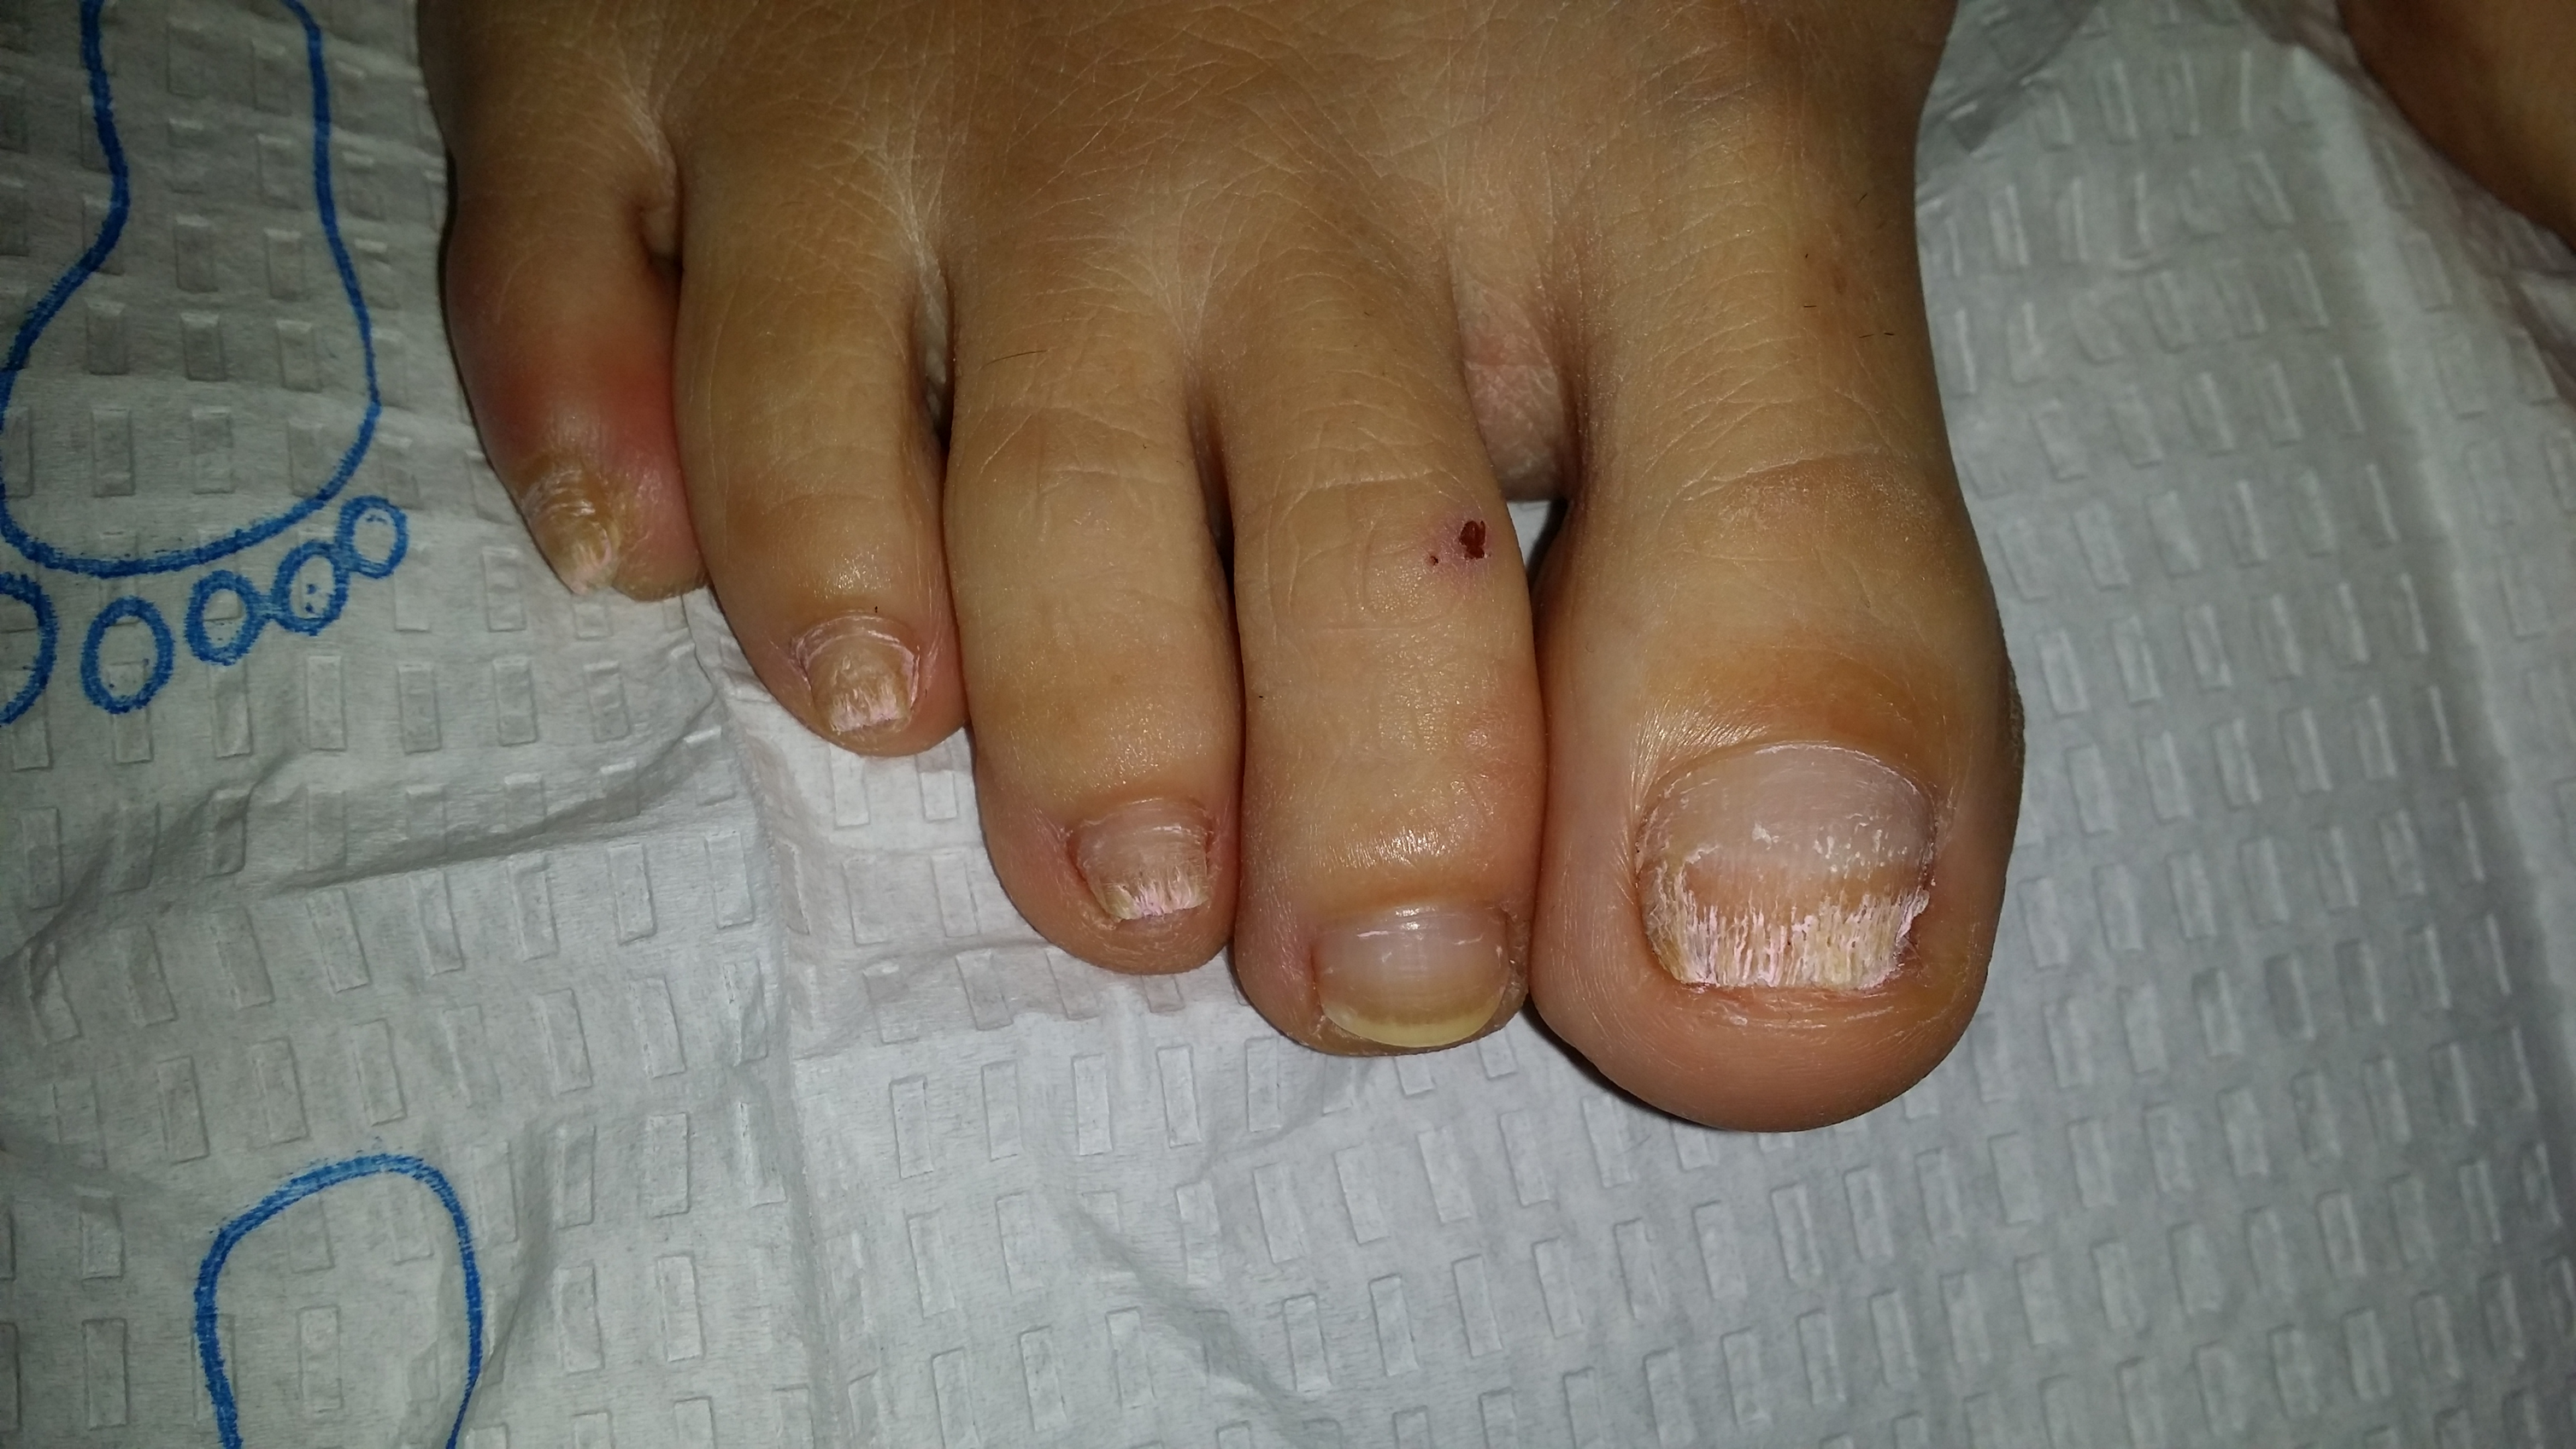 mild toe fungus treatment